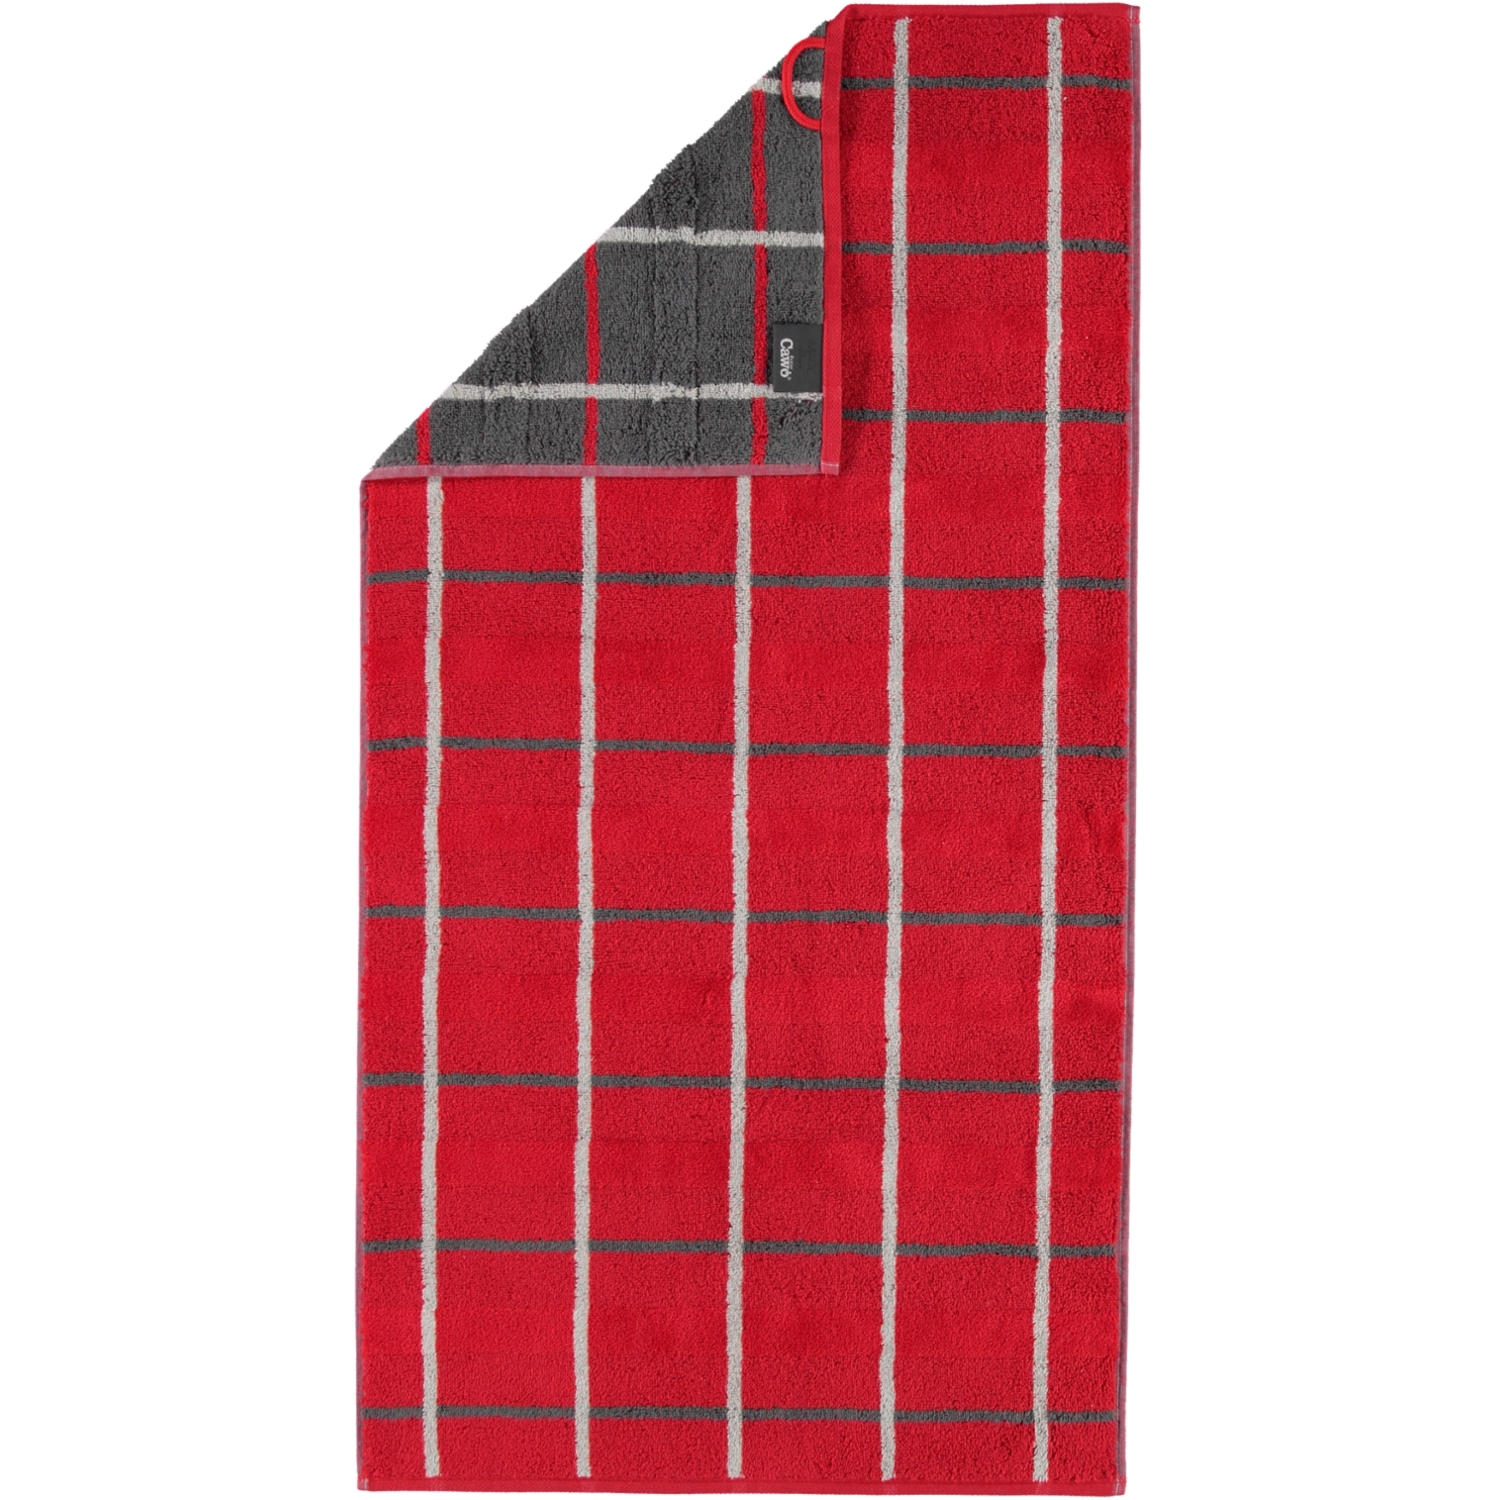 HANDTUCH Noblesse Square  - Dunkelgrau/Rot, Basics, Textil (50/100cm) - Cawoe